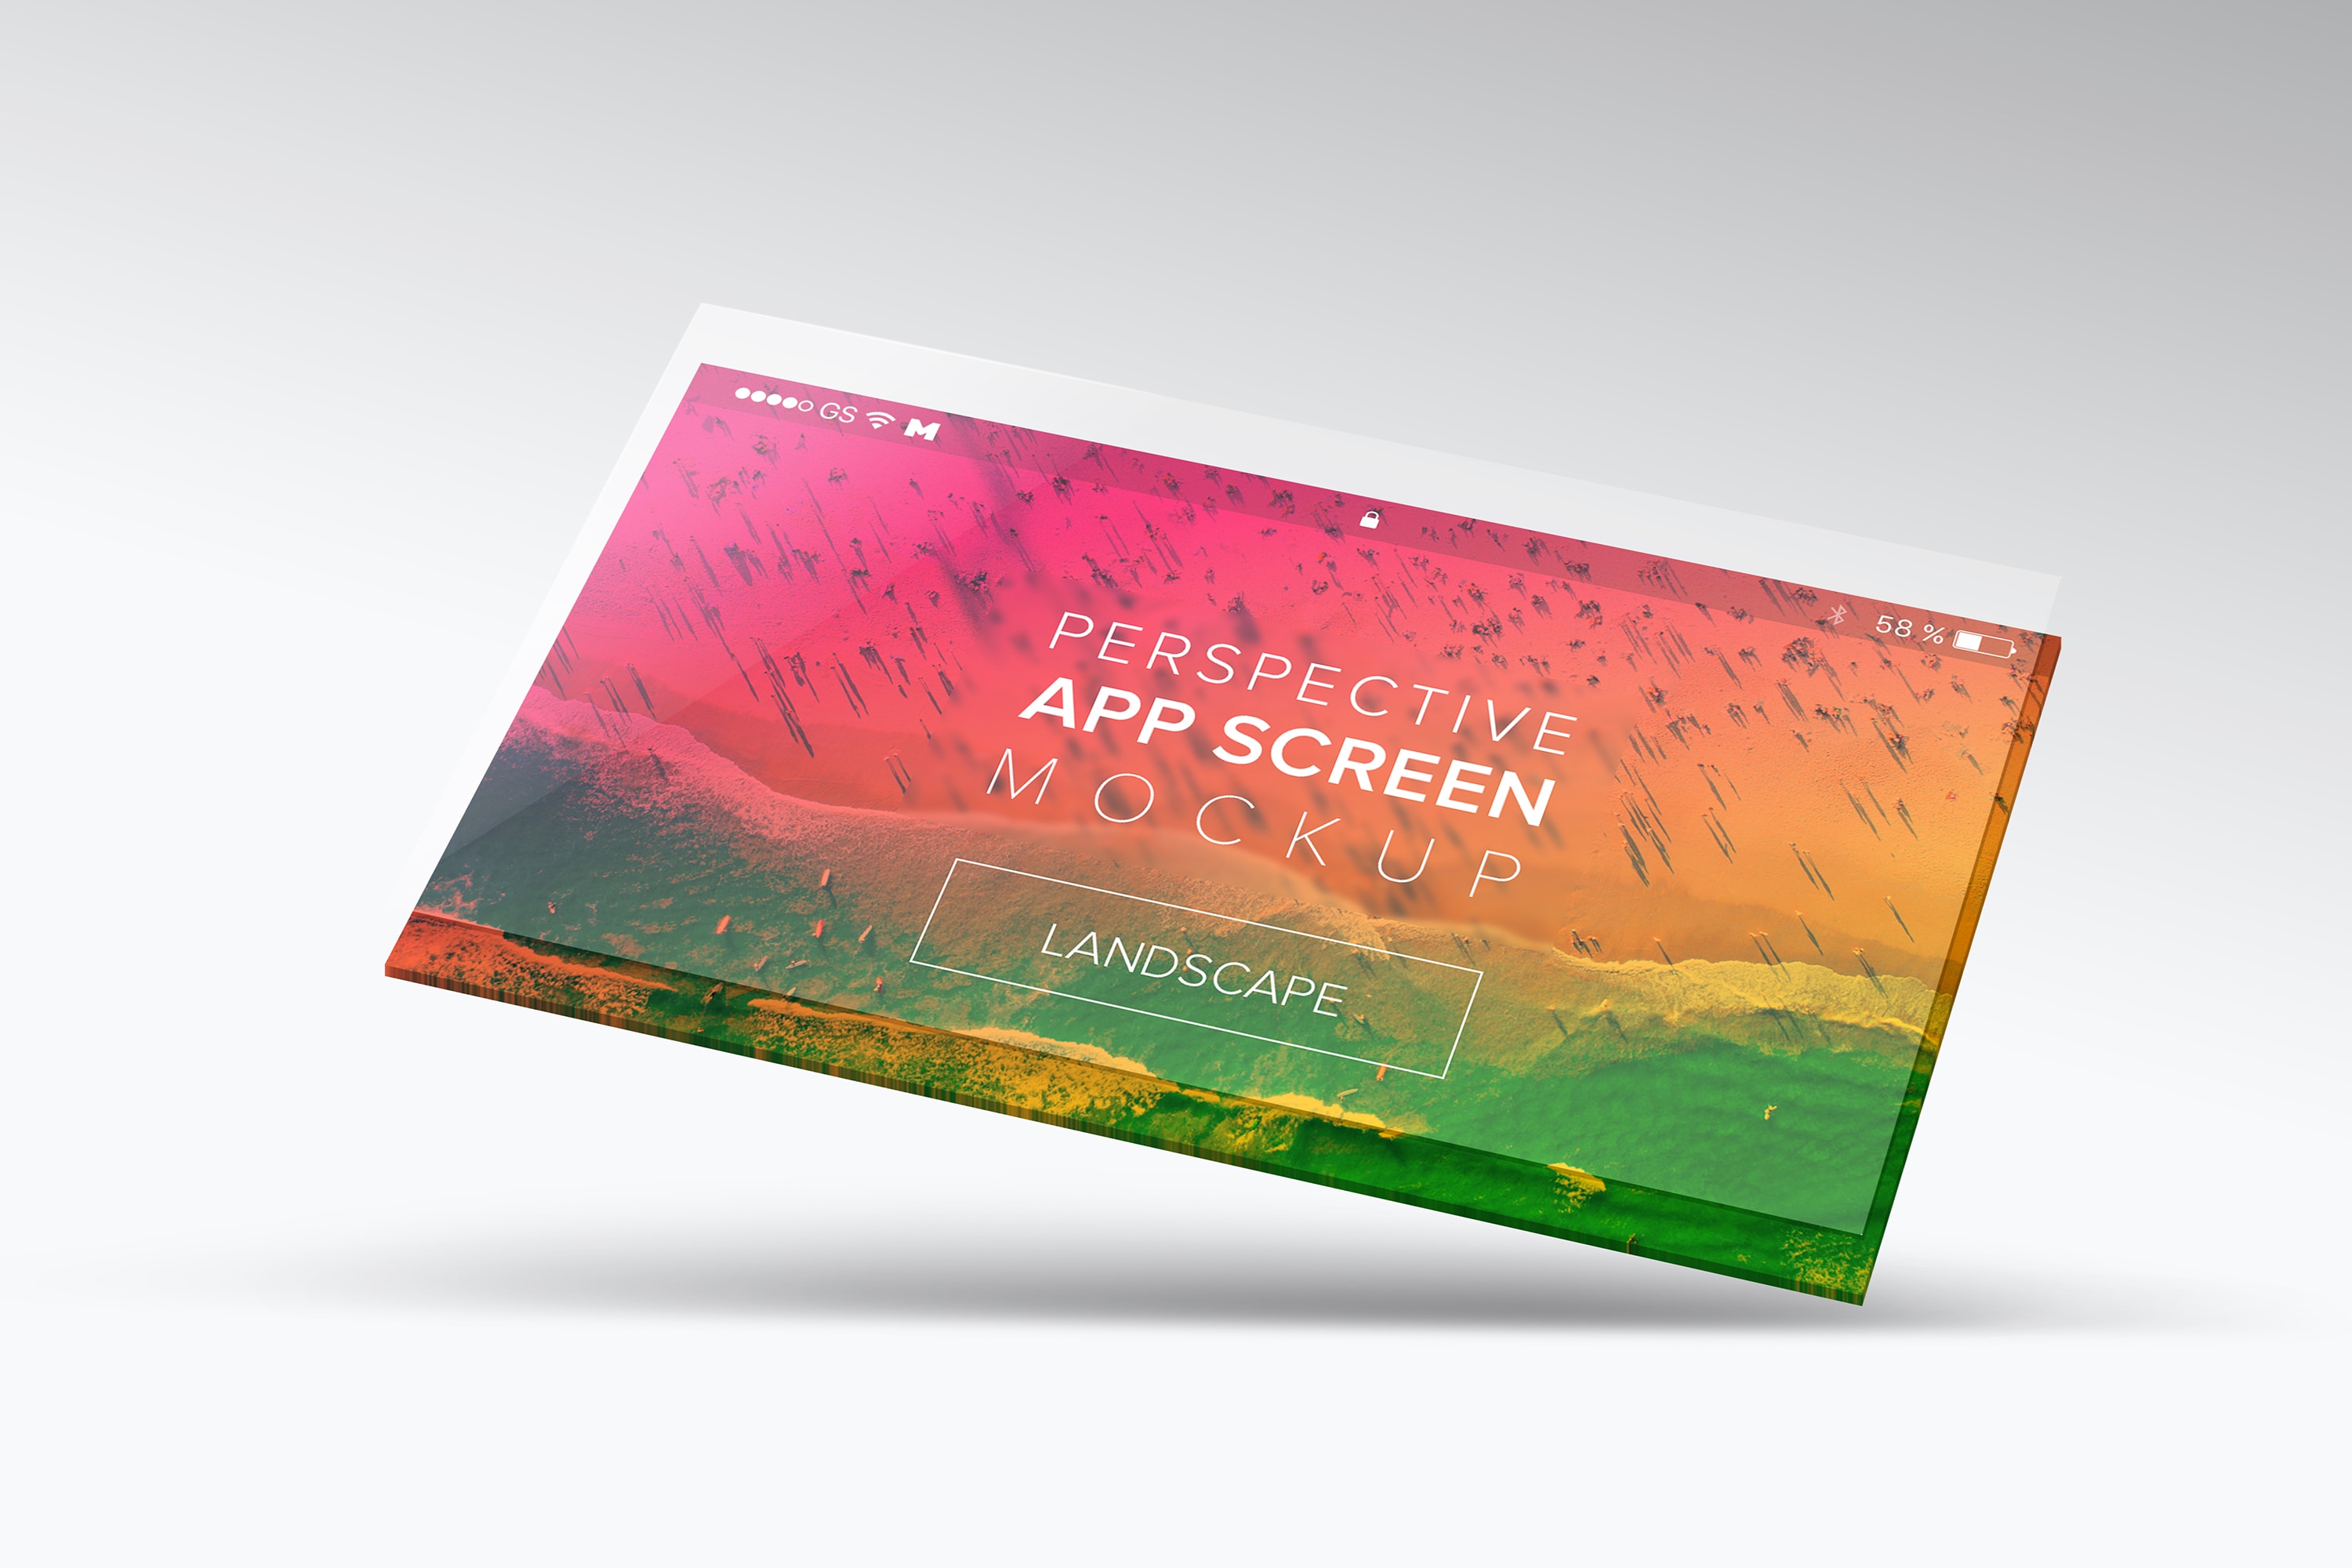 APP屏幕界面设计演示样机模板04 Perspective App Screen Mockup 04插图